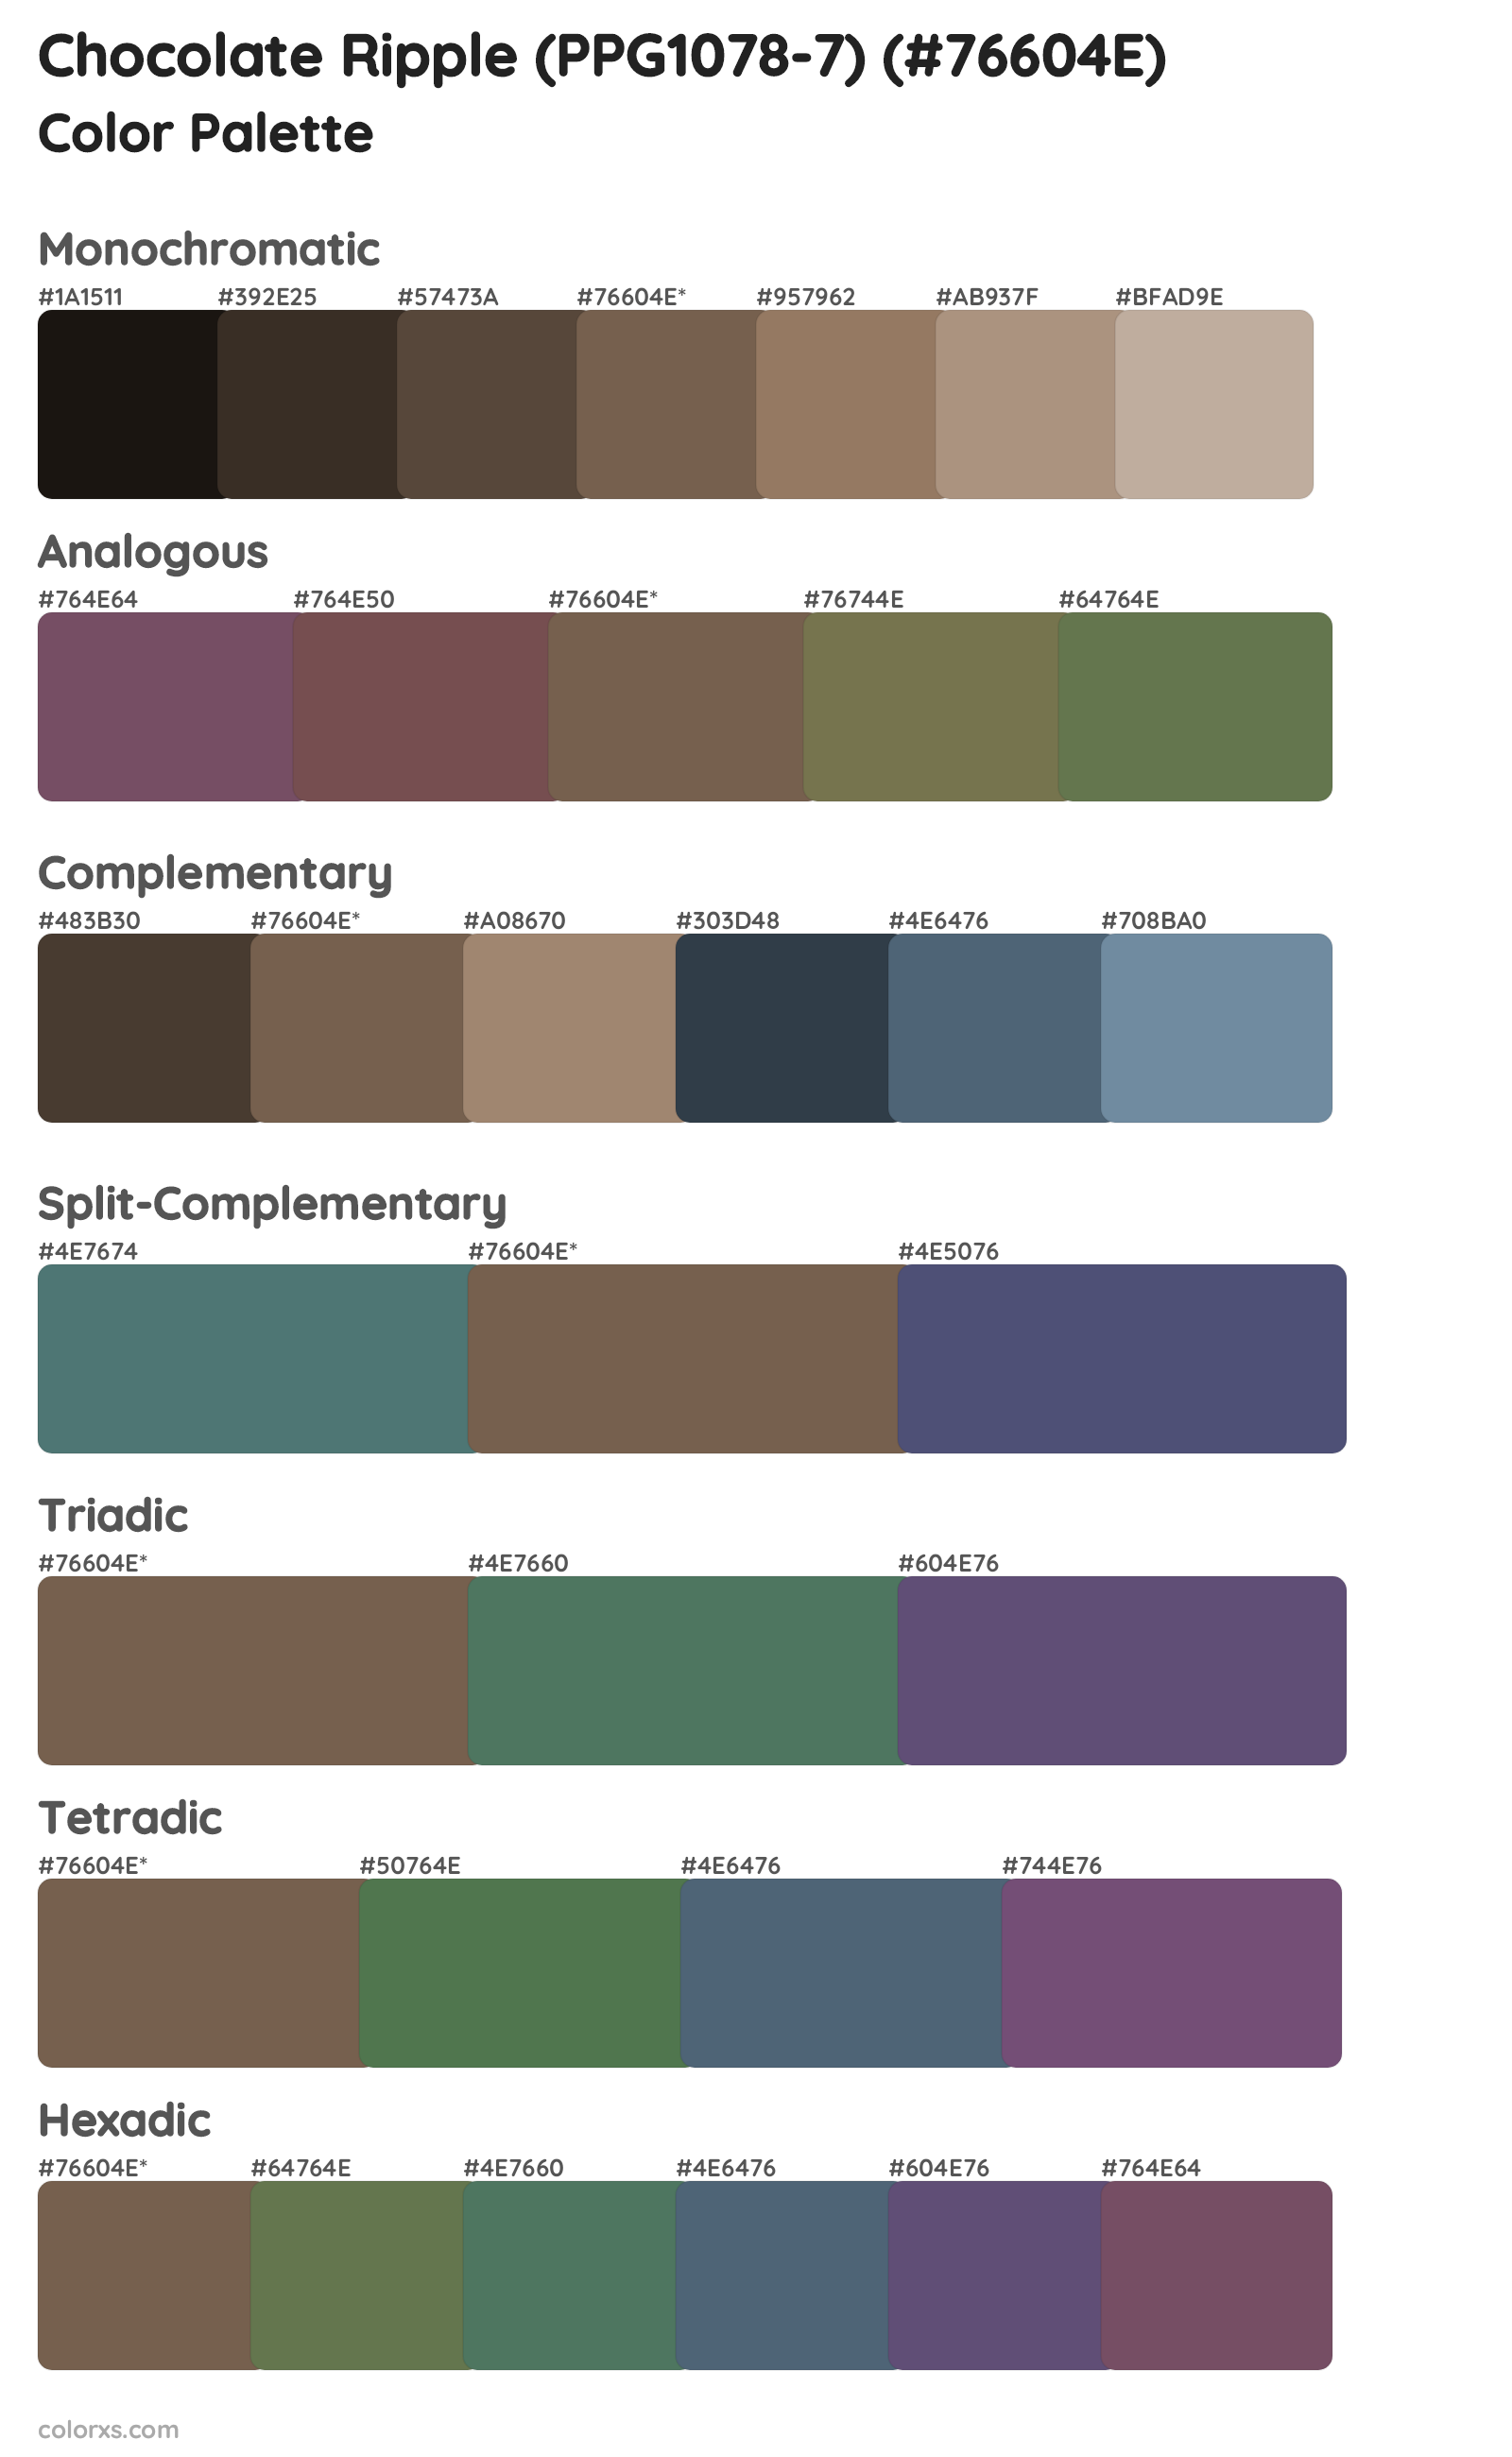 Chocolate Ripple (PPG1078-7) Color Scheme Palettes